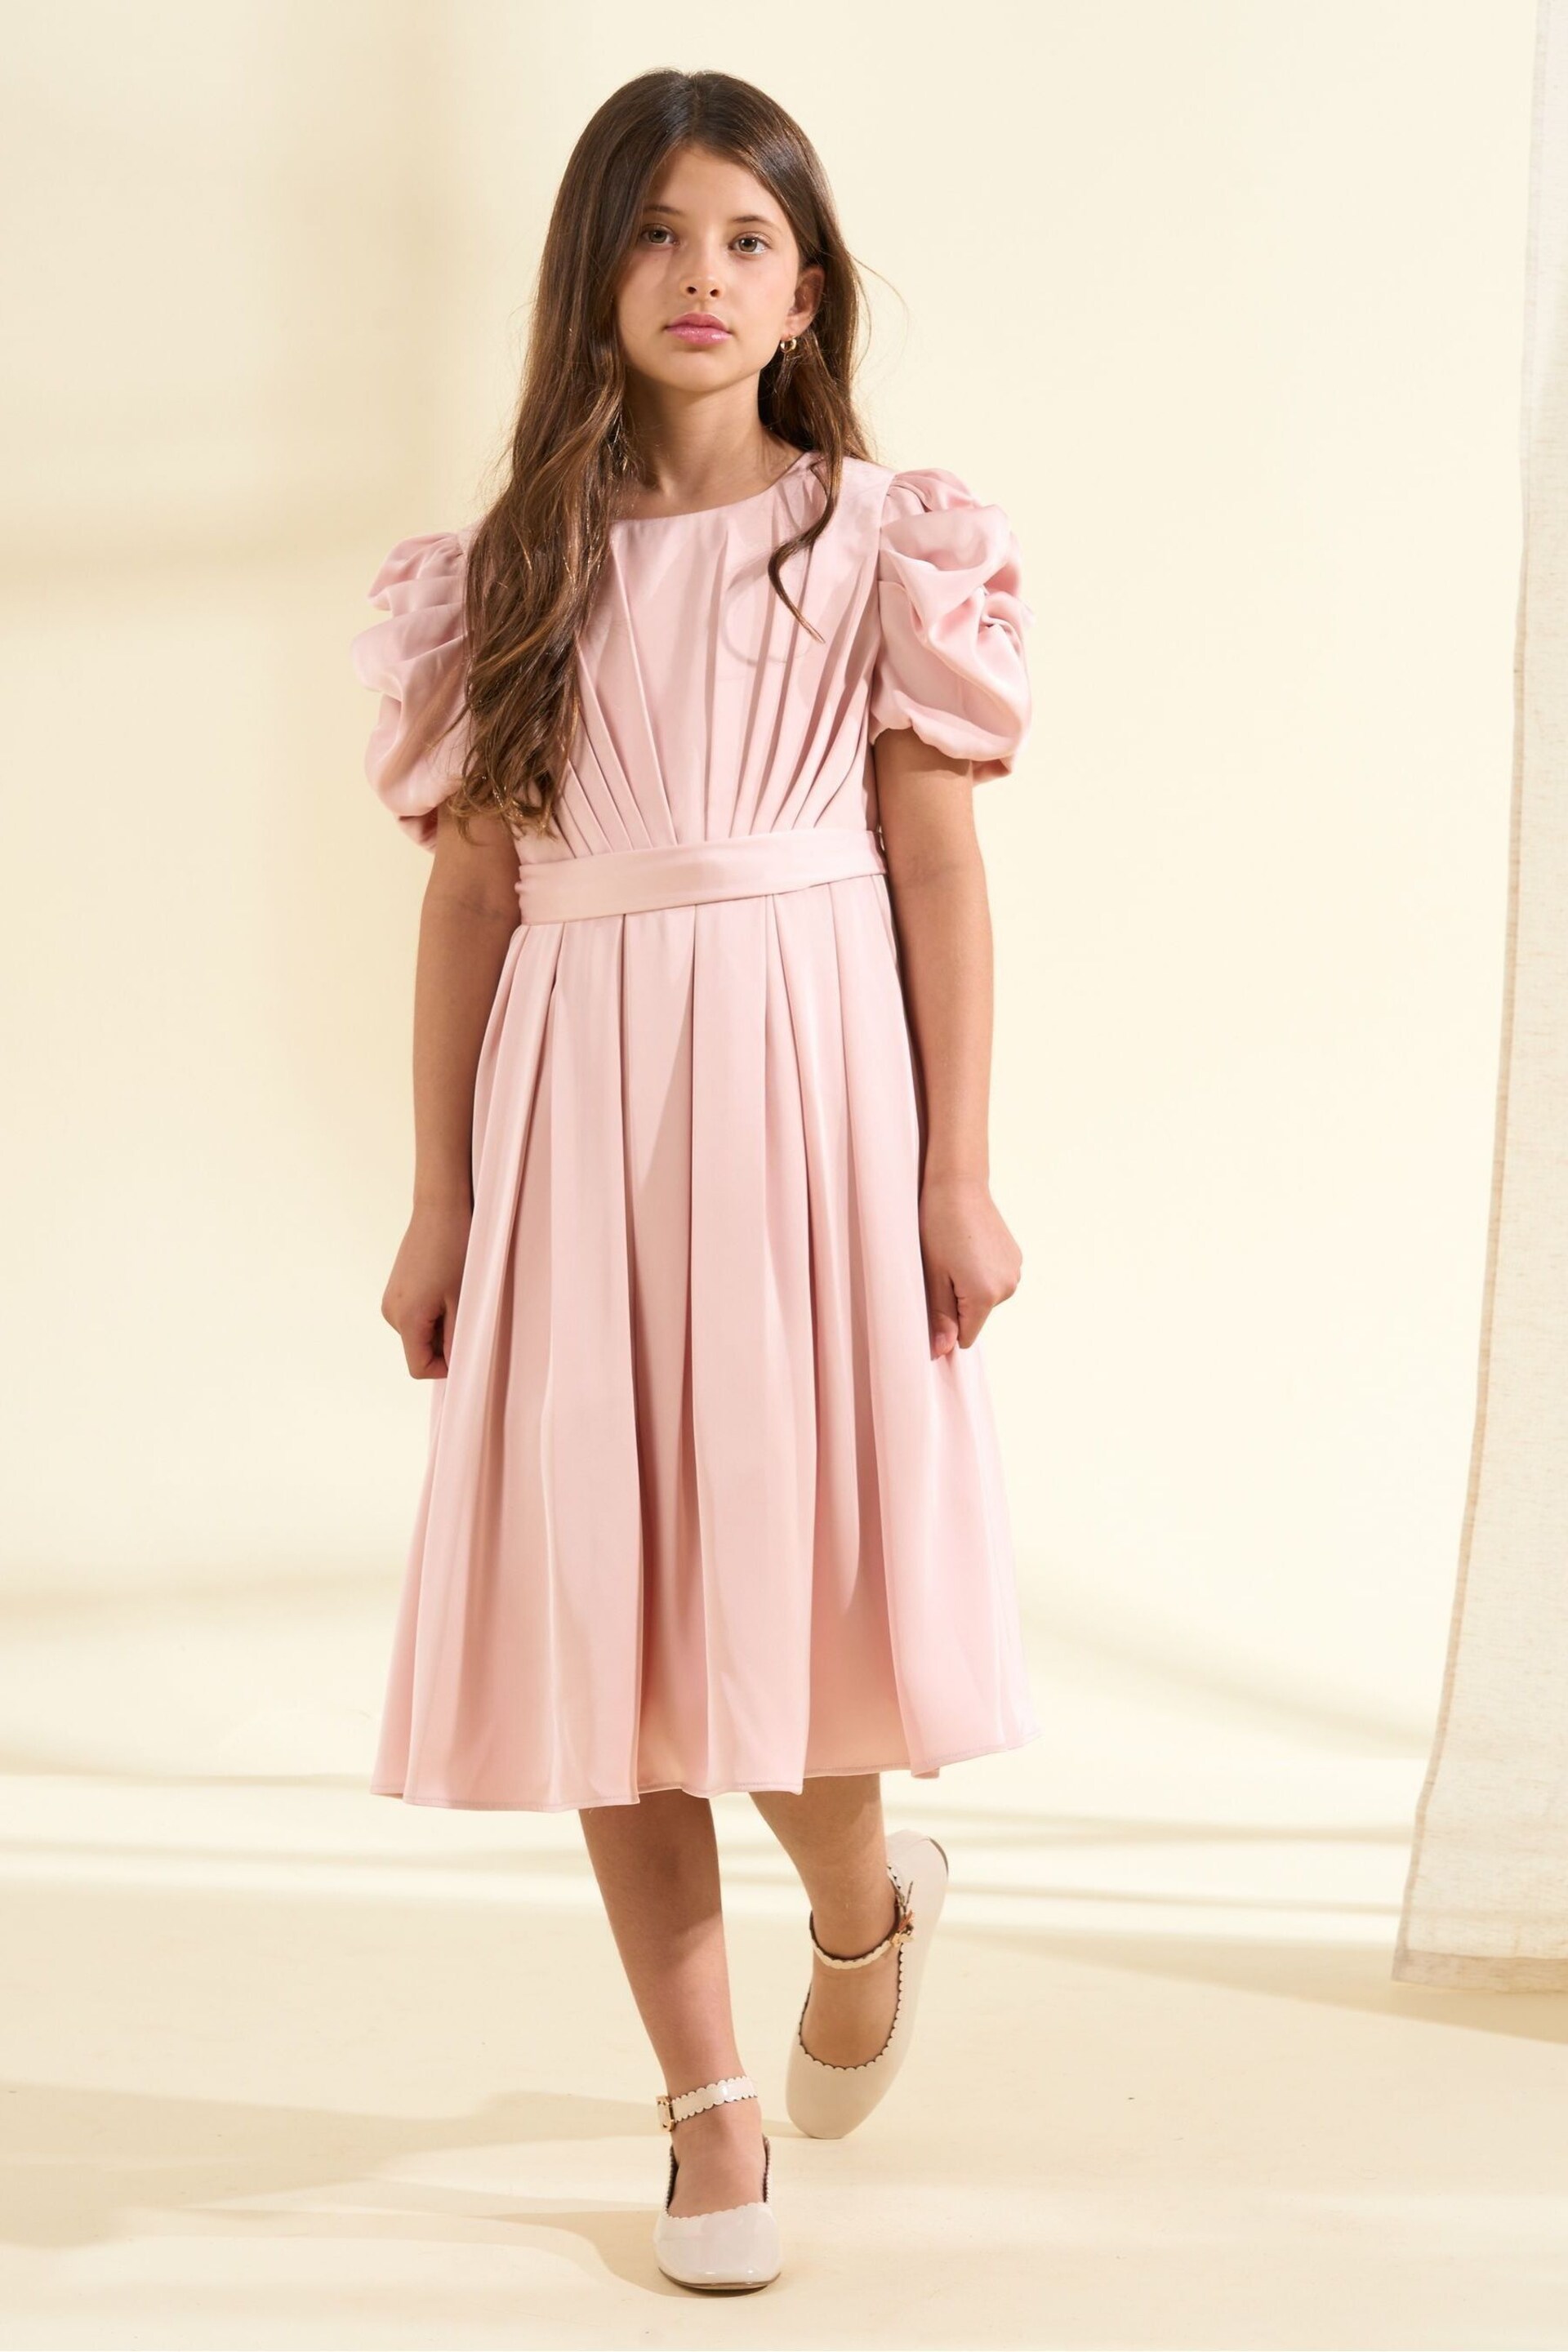 Angel & Rocket Blush Pink Portia Pleated Bodice Bow Dress - Image 3 of 9